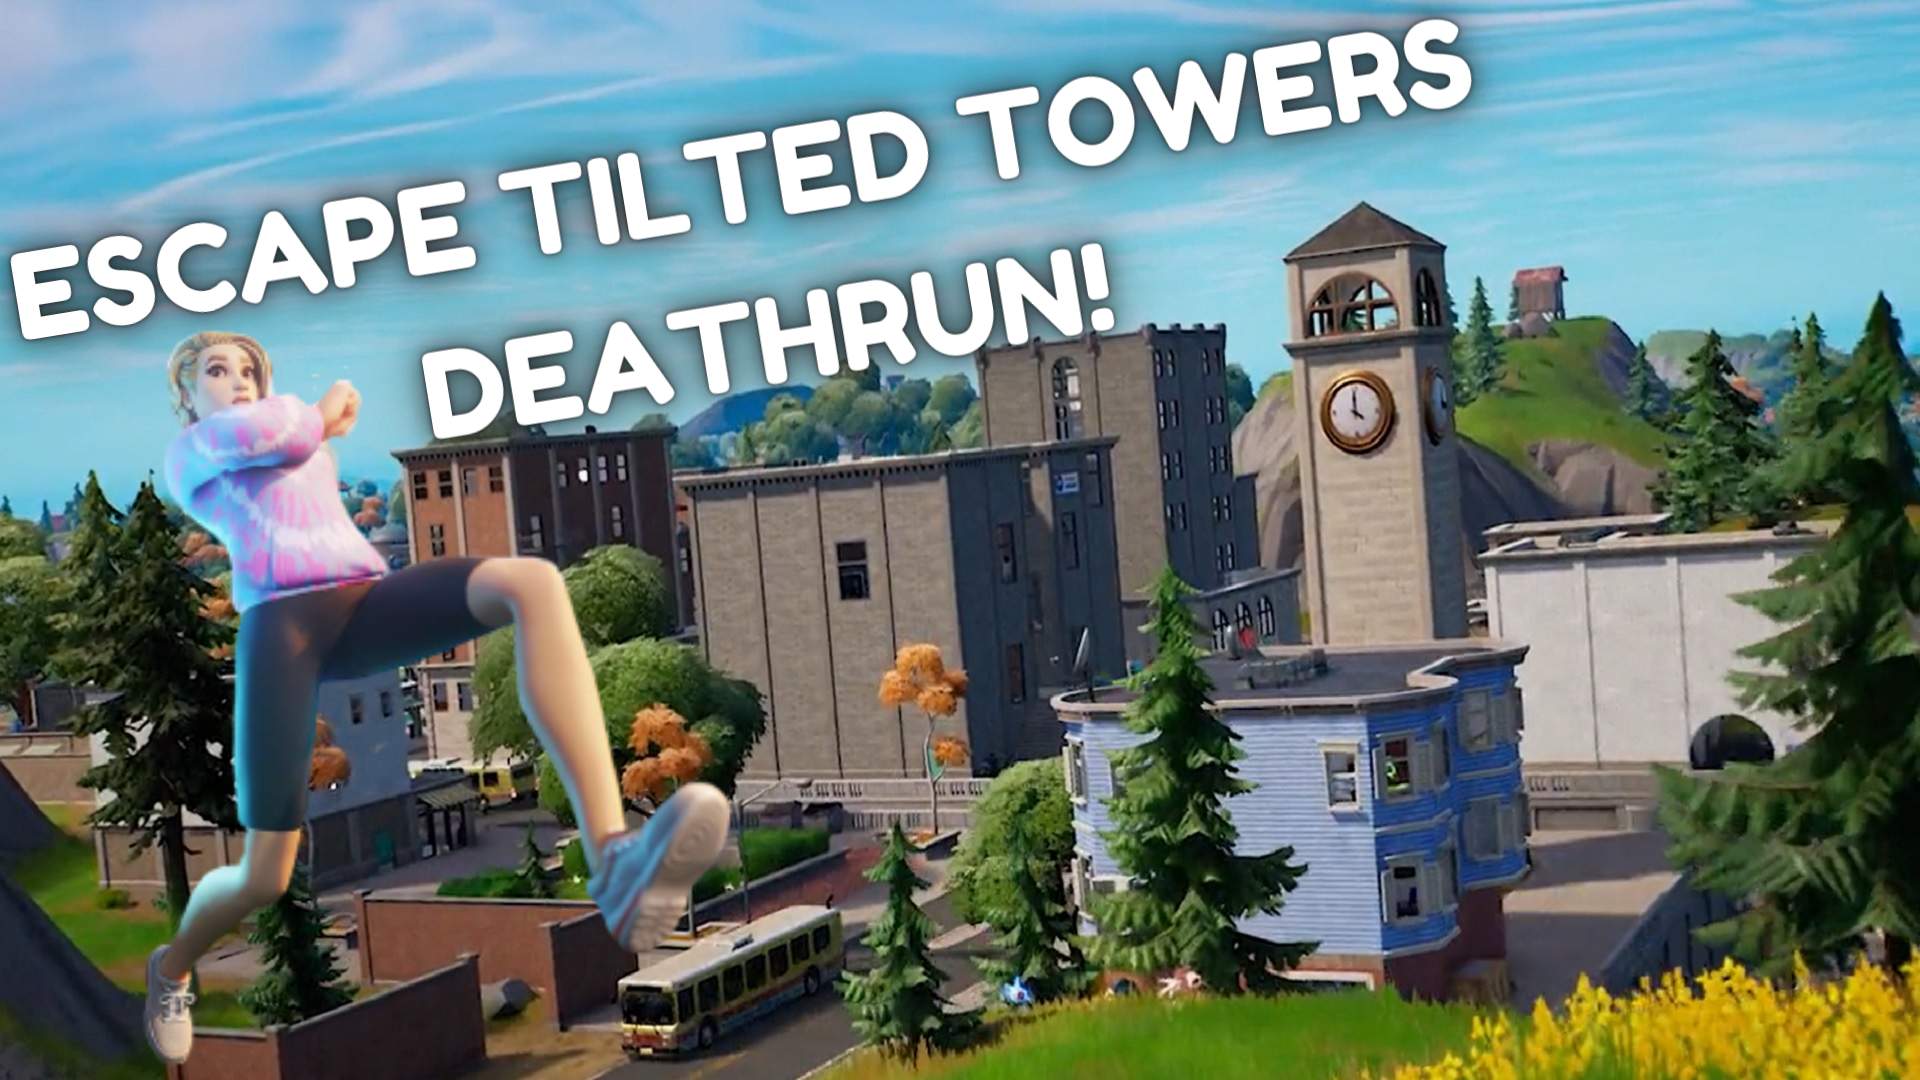 Escape TILTED TOWERS DEATHRUN!!